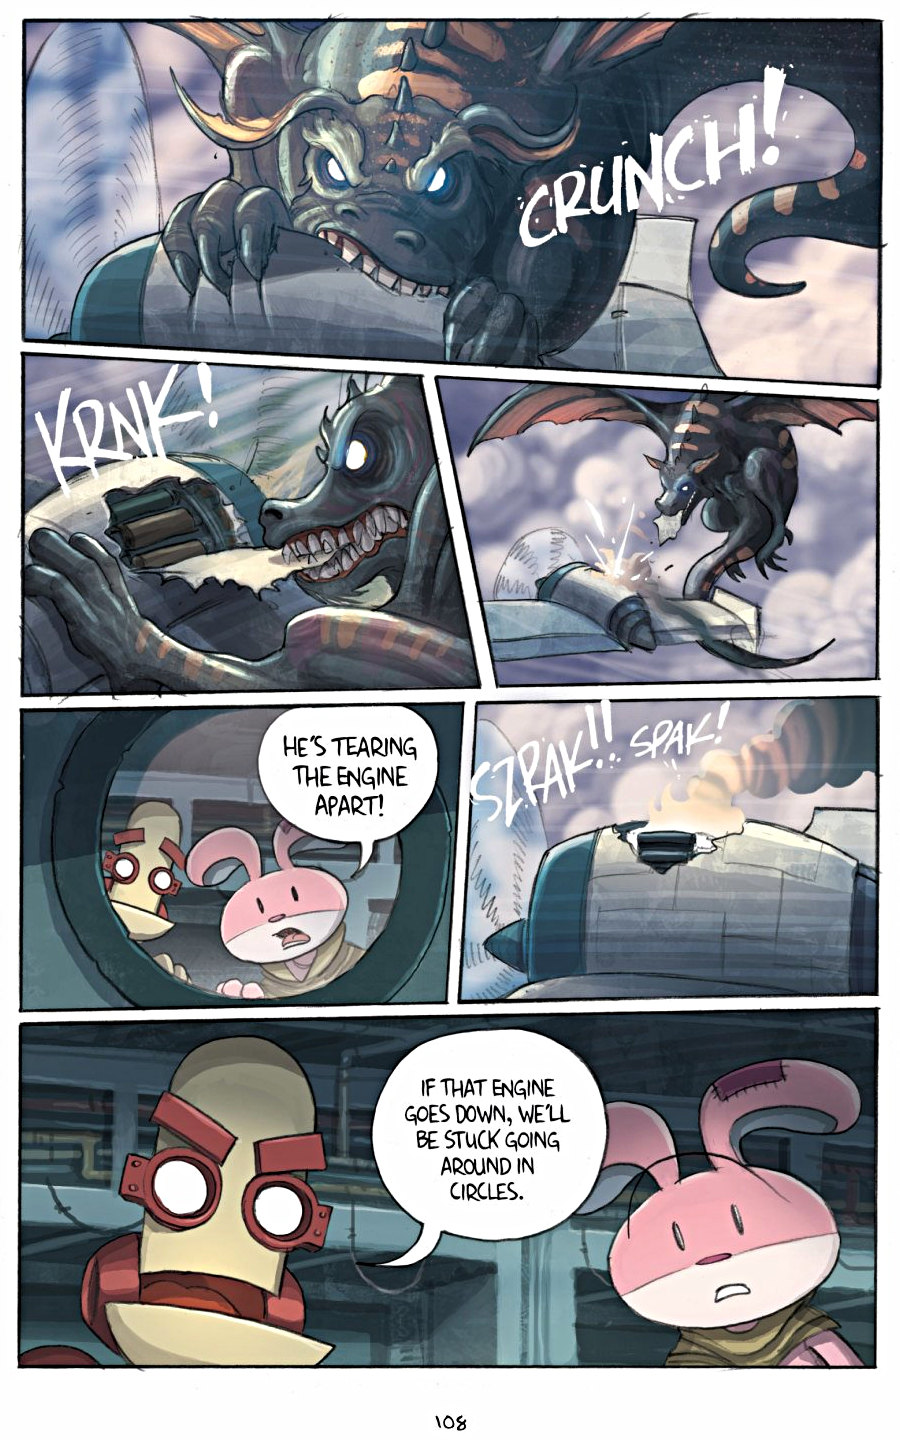 page 108 of amulet 3 cloud searchers graphic novel by kazu kibuishi